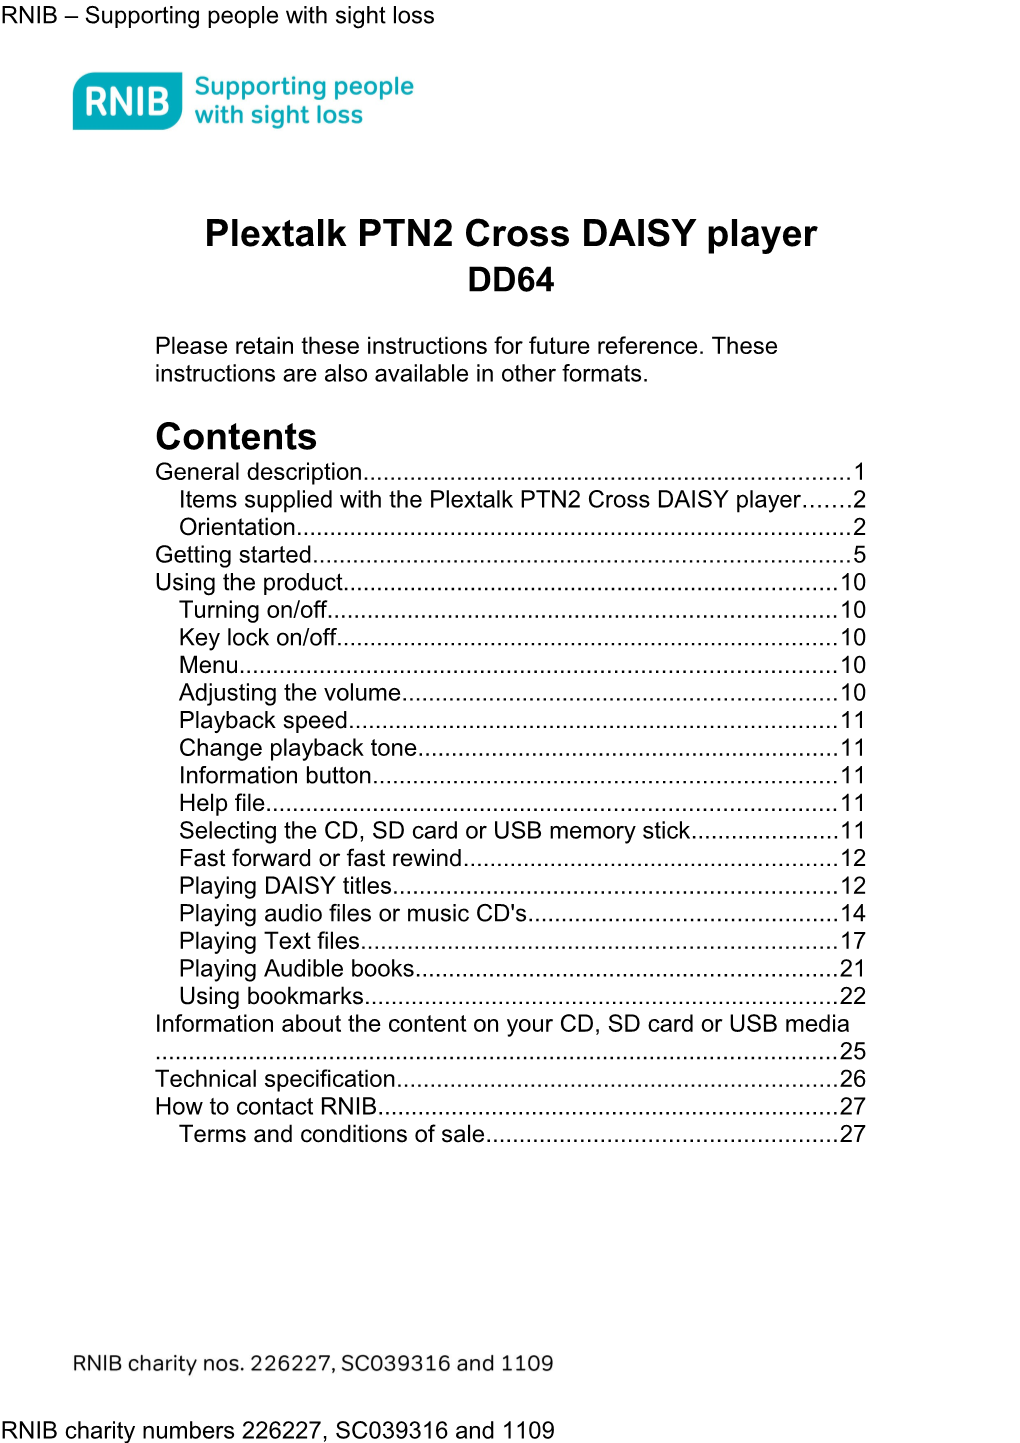 Plextalk PTN2 Cross DAISY Player